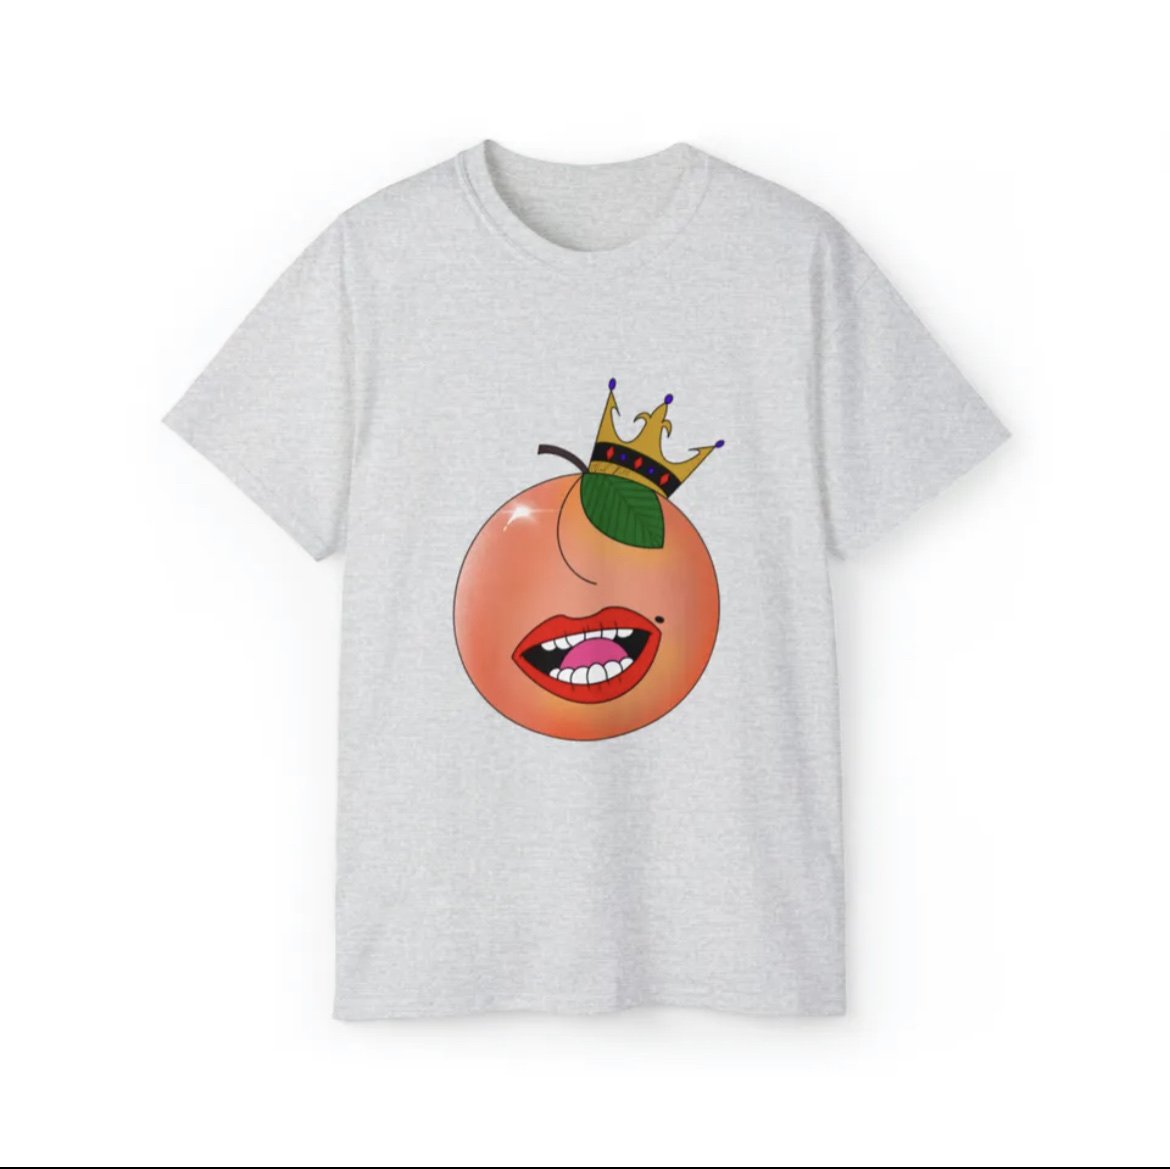 Grab a “Royal Peach Ultra Cotton Tee” by SoOo Incredible Goodies for $20.99 on #eBay   ➡️👉🏽 ebay.com/itm/1758538354… 👈🏽 ⬅️ #freshfit #newshirt #newdesign #fresh #losangeles #designer #tshirt #art #artwork #peach #peaches #retweet #RT 🤘🏽🔥